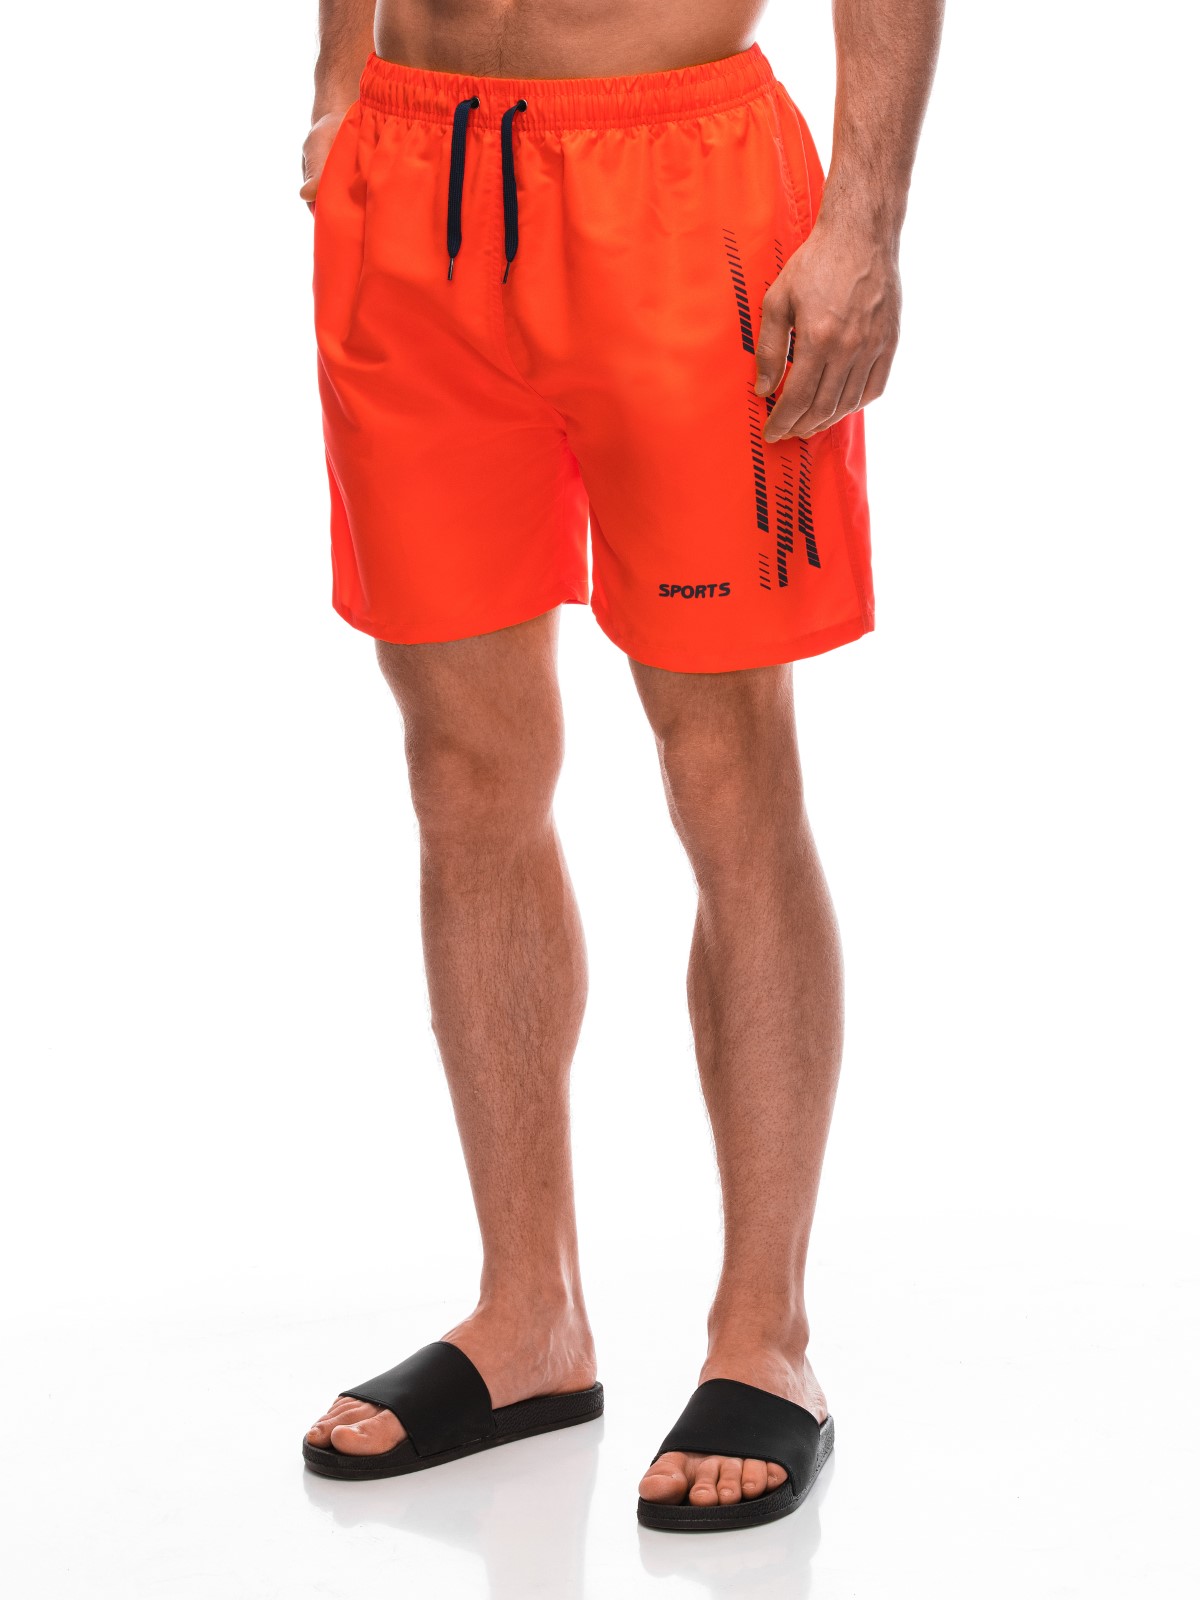 Men's swimming shorts W459 - orange | MODONE wholesale - Clothing For Men